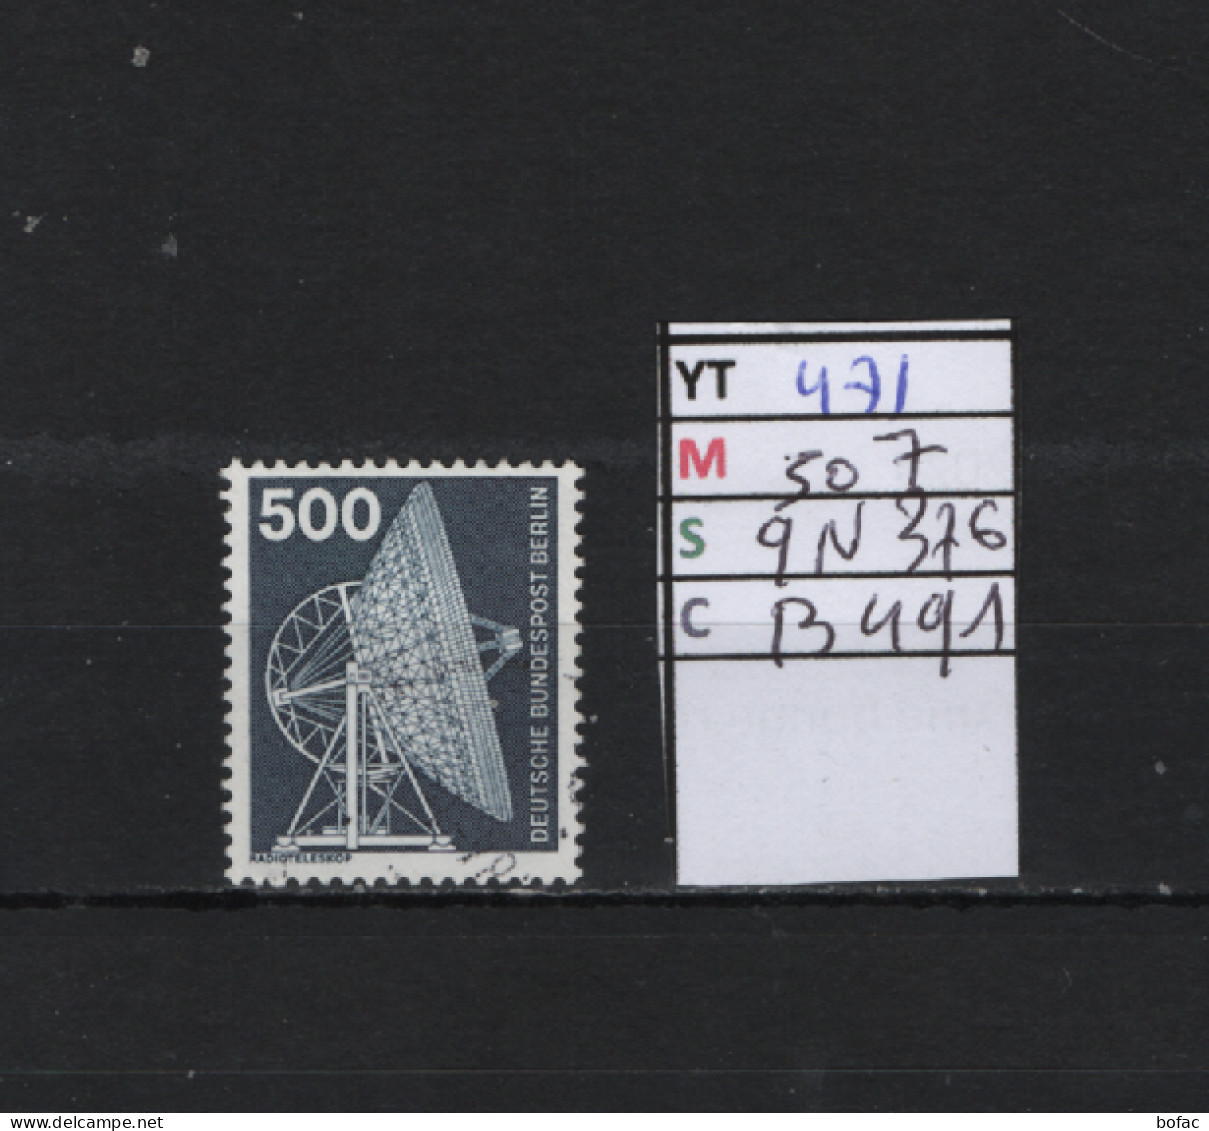 P. FIXE Obl 471 YT 507 MIC 9N376 SCO B491 GIB Radiotélescope Industrie Et Technique 1975 1976  *Berlin* 75/03 - Used Stamps